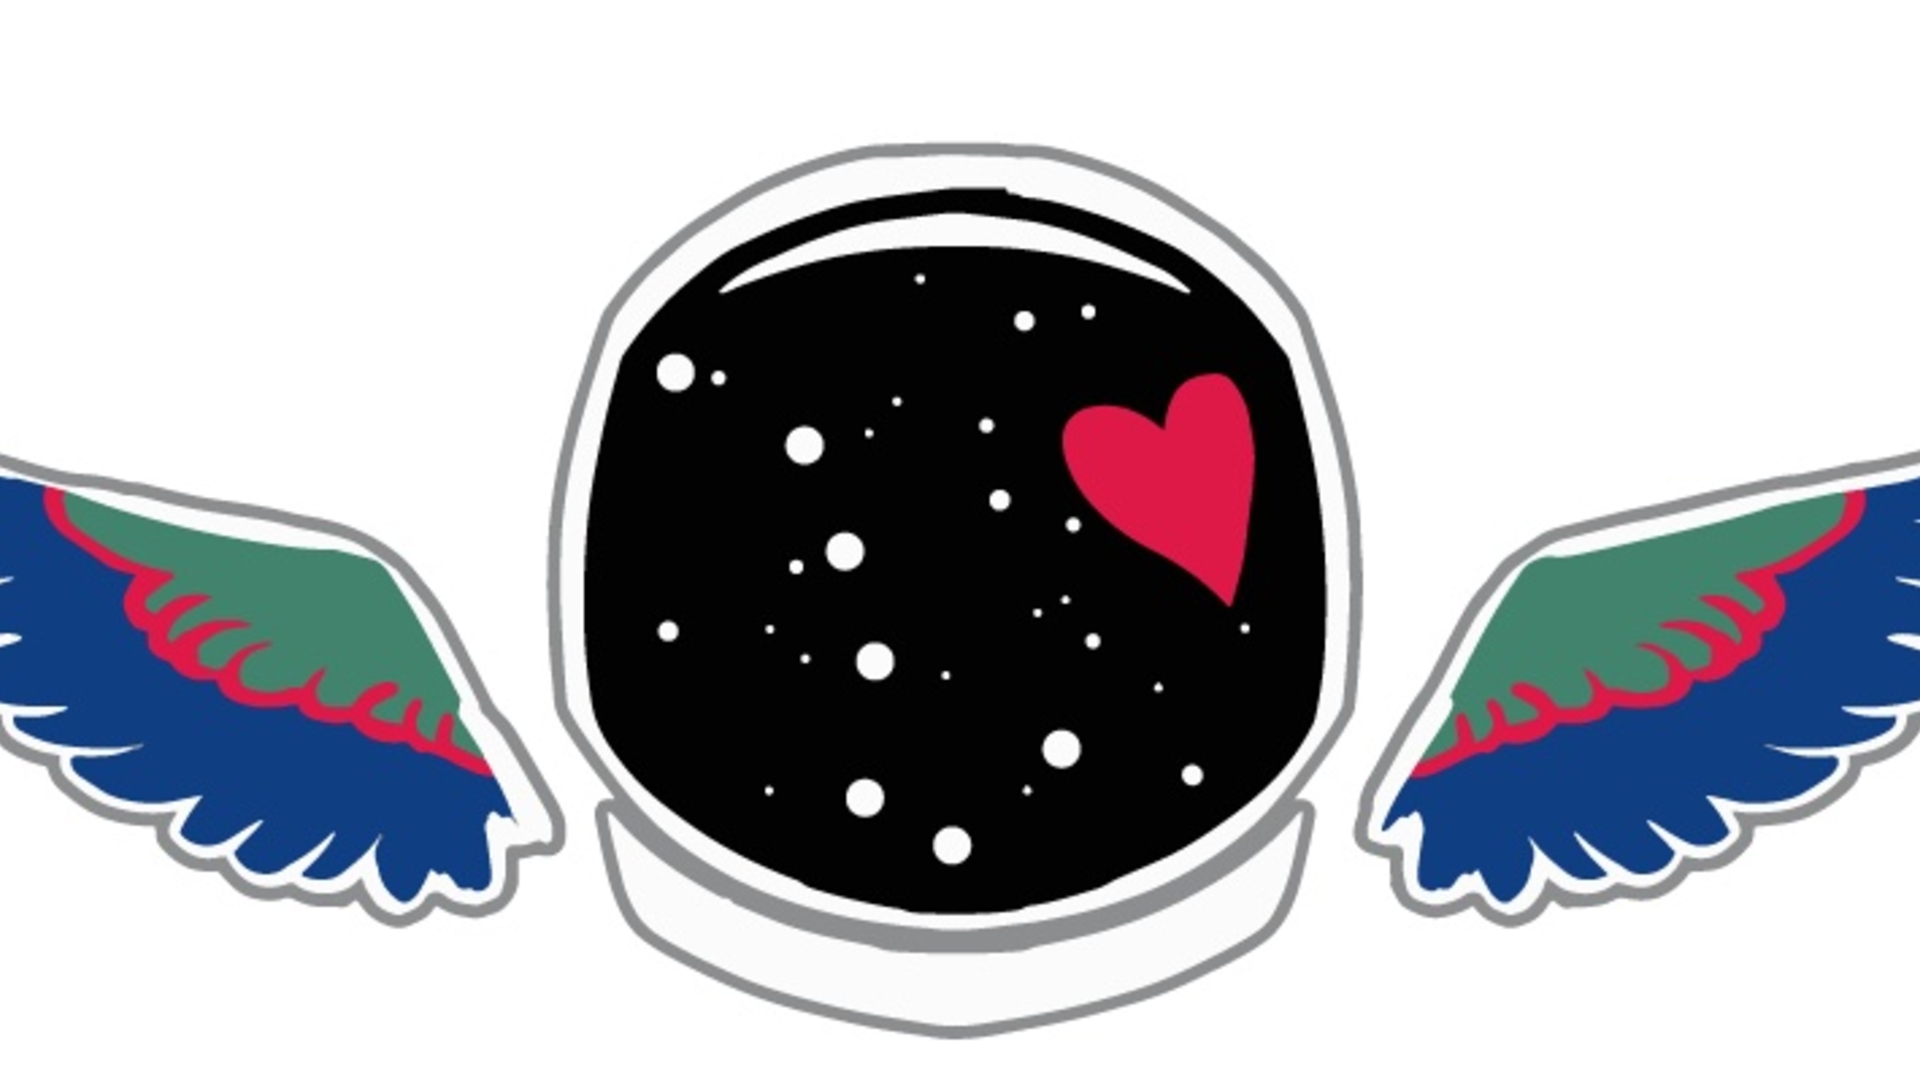 Brooke Owens Fellows logo of an astronaut helmet with wings on each side